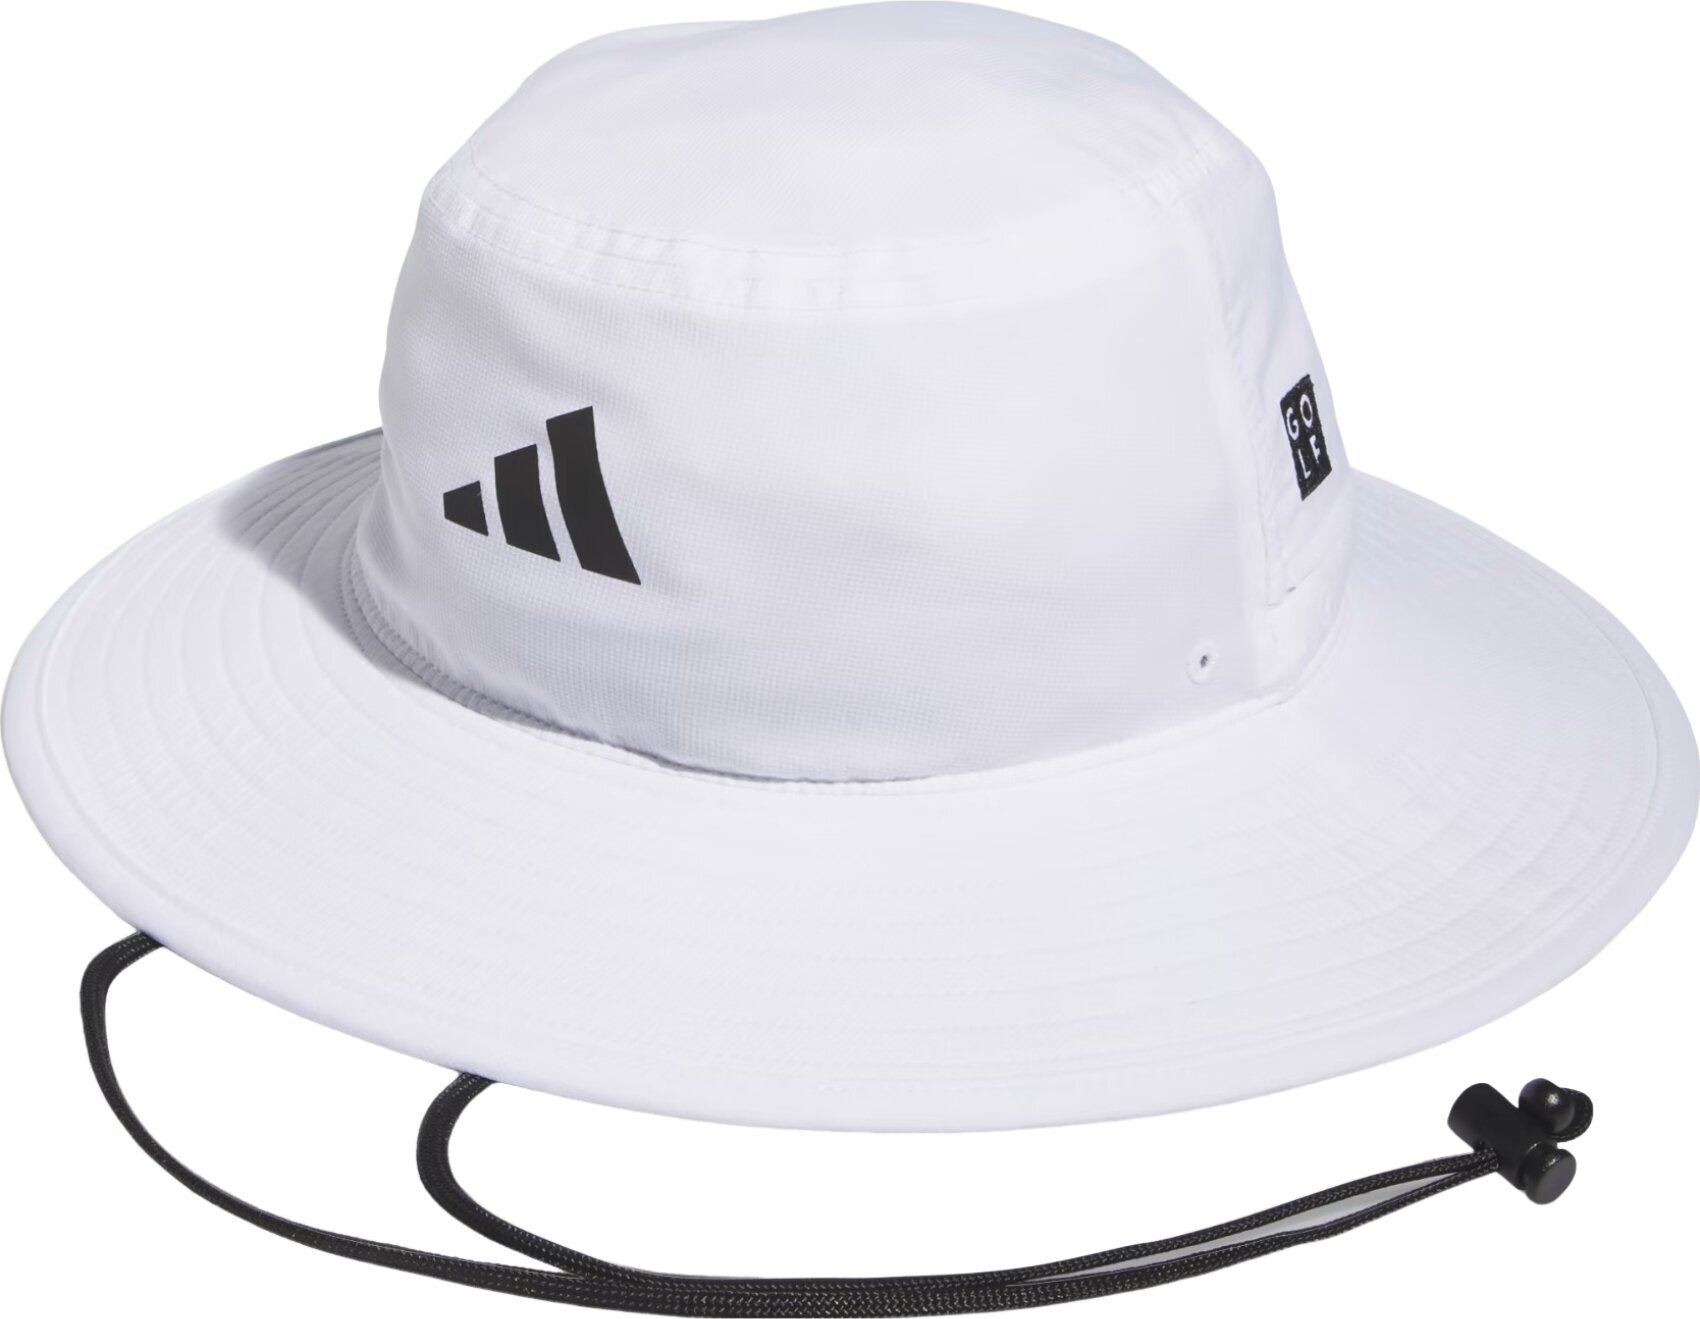 Klobuki Adidas Wide Brim Golf Hat White L/XL